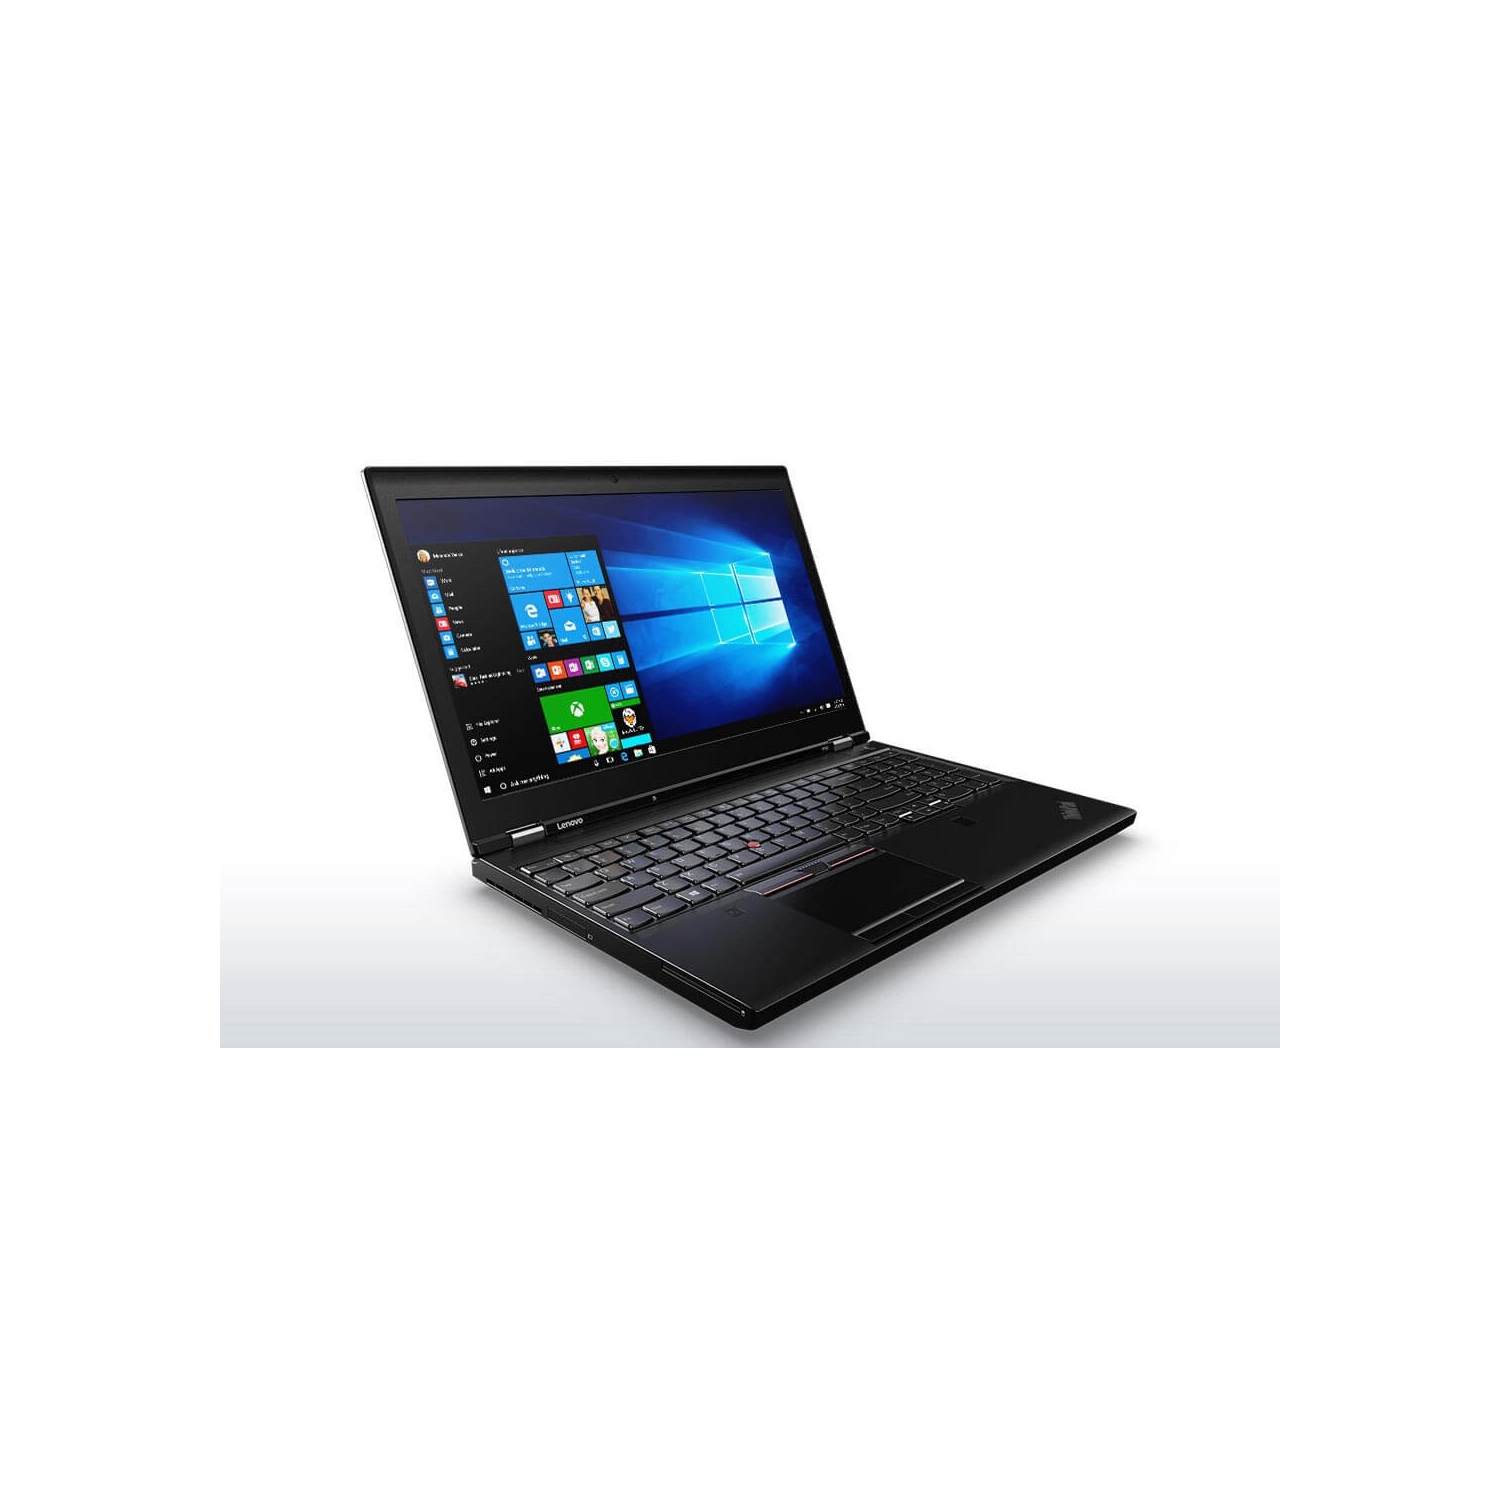 Refurbished (Good) - Lenovo ThinkPad P50 15.6" Screen Laptop (Intel Core i7-6820HQ, 32GB RAM, 512GB SSD)